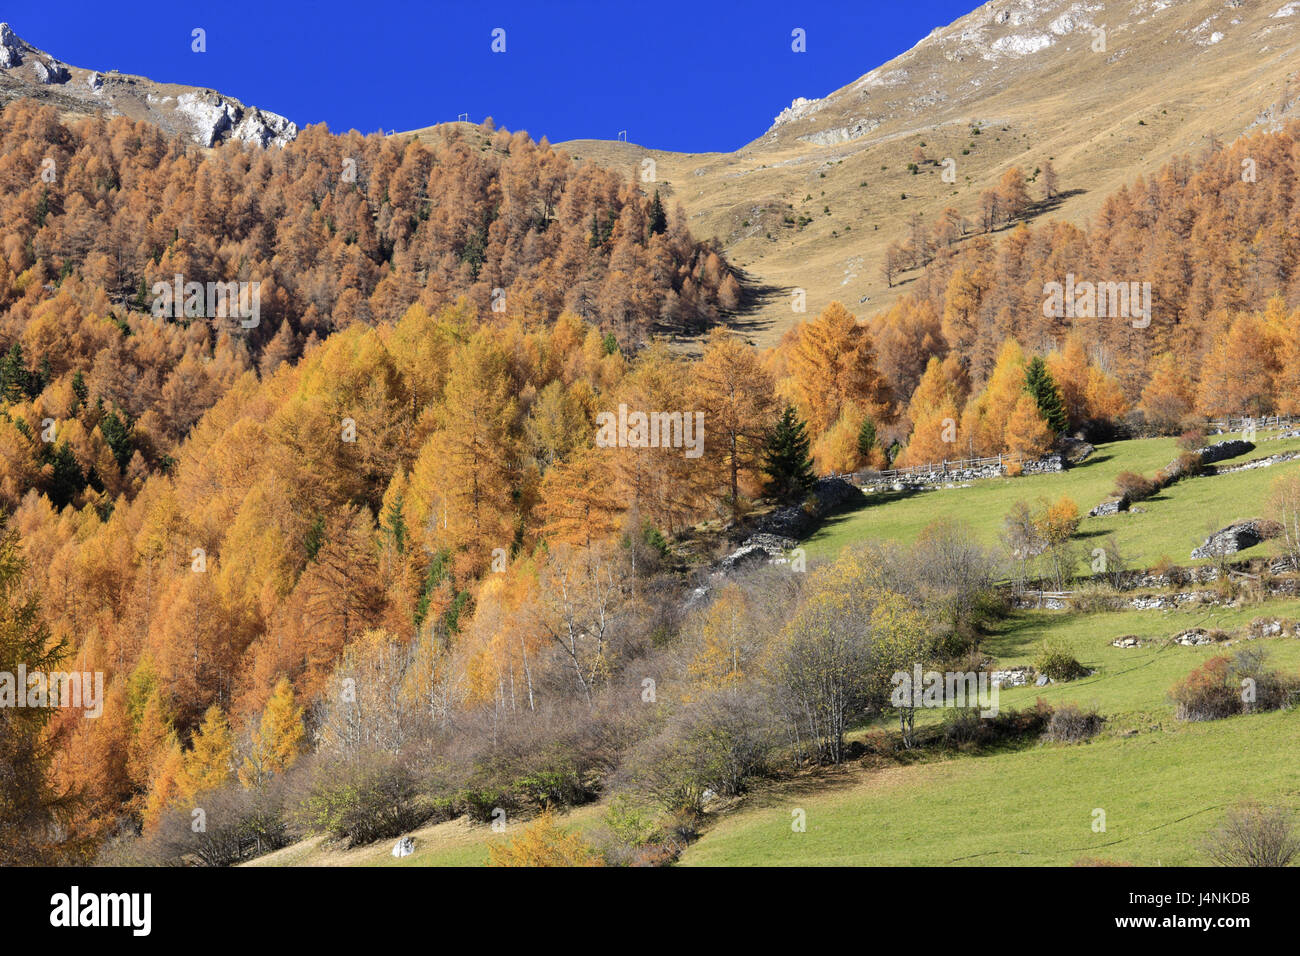 Italy, South Tirol, Vinschgau, Martelltal, national park Stilfser col, Martelltal, Stock Photo